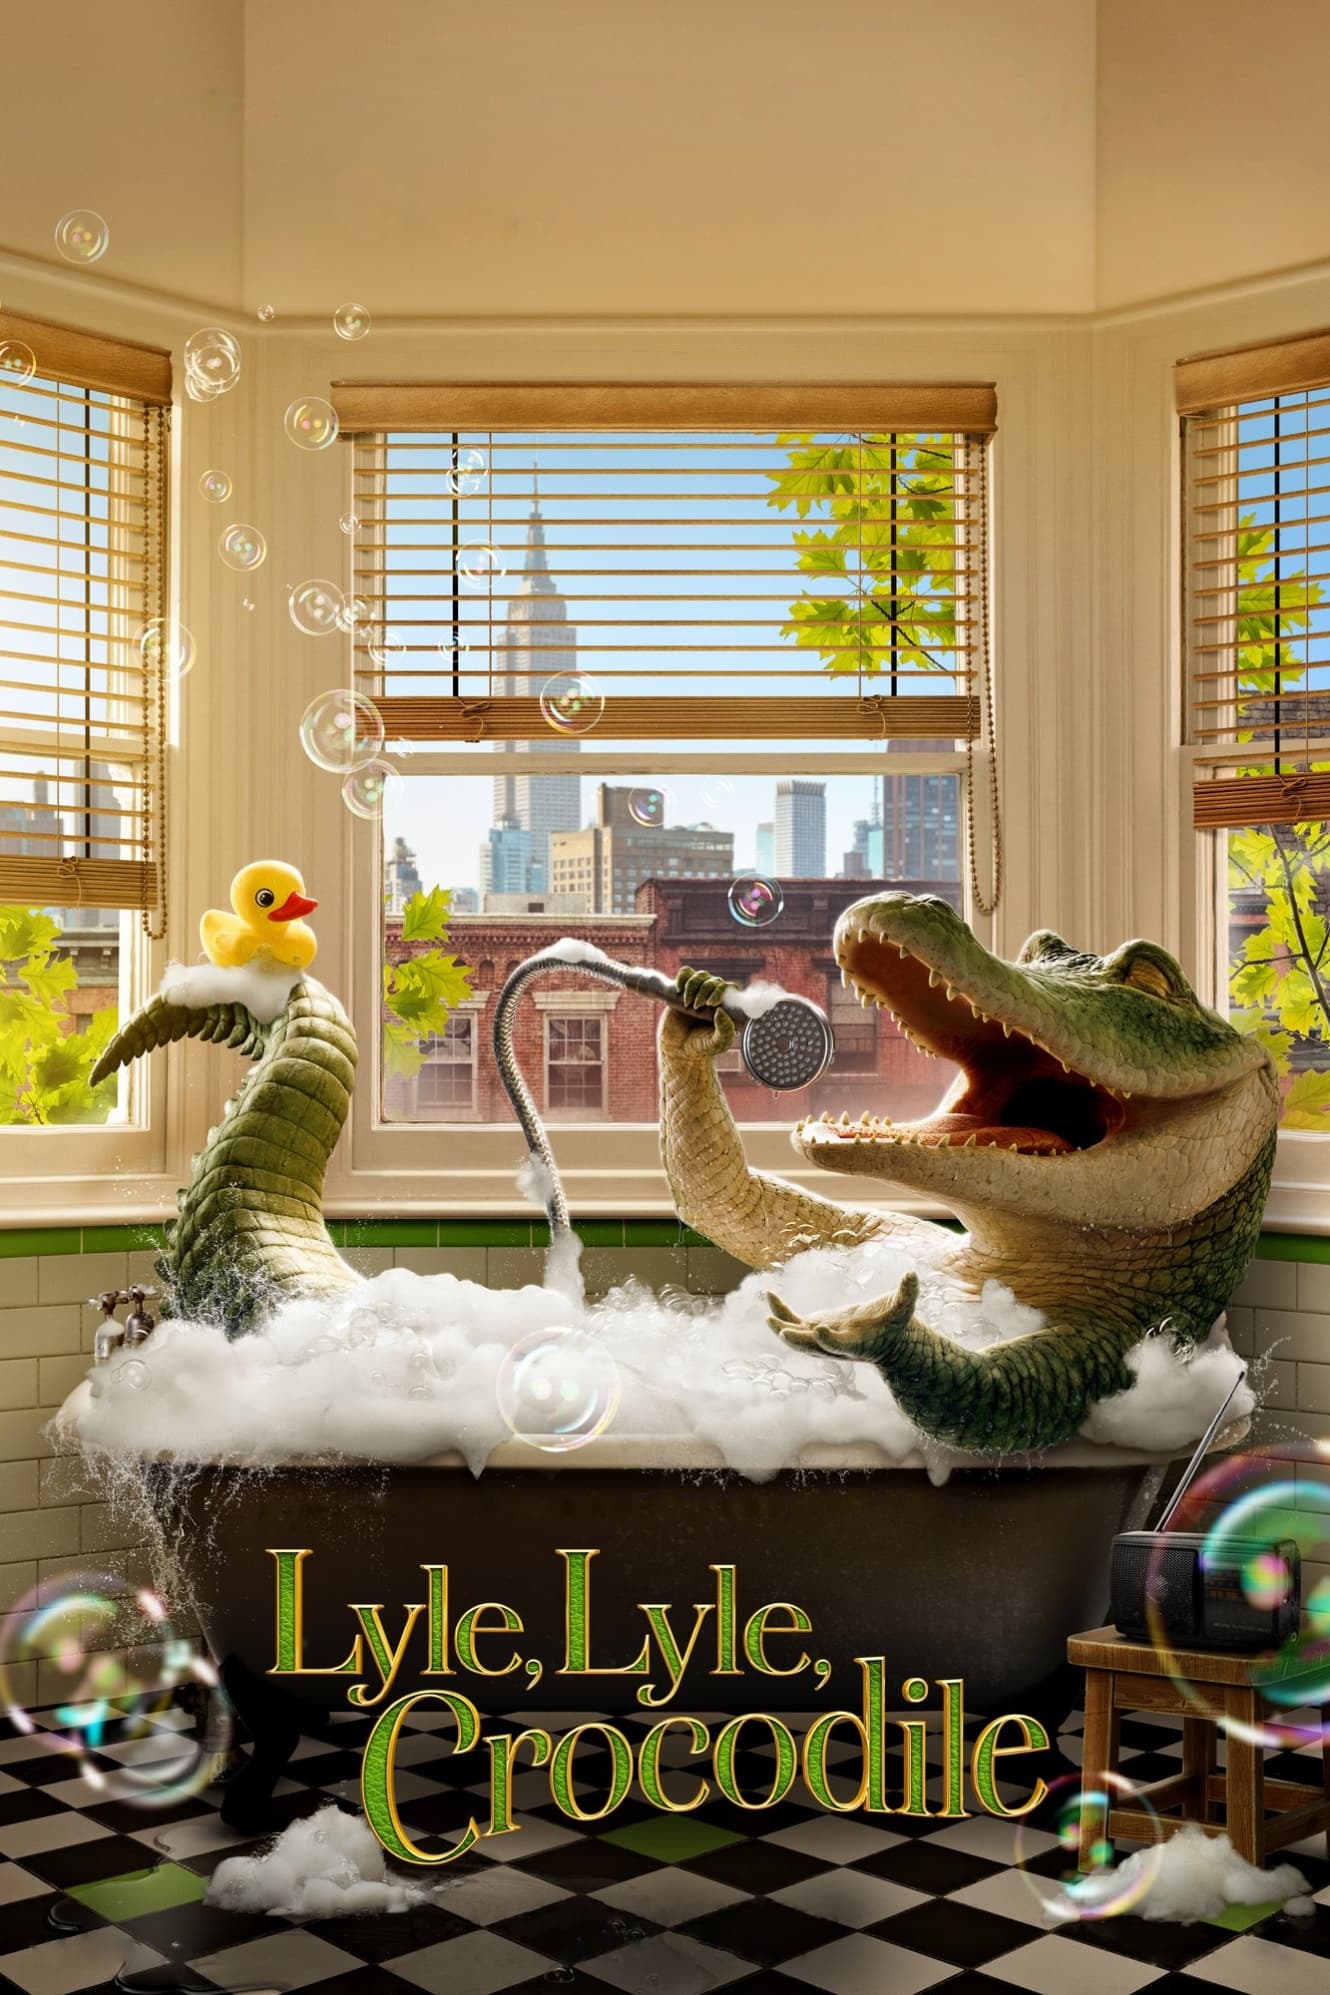 Lyle Lyle Crocodile movie bathtub poster 2022